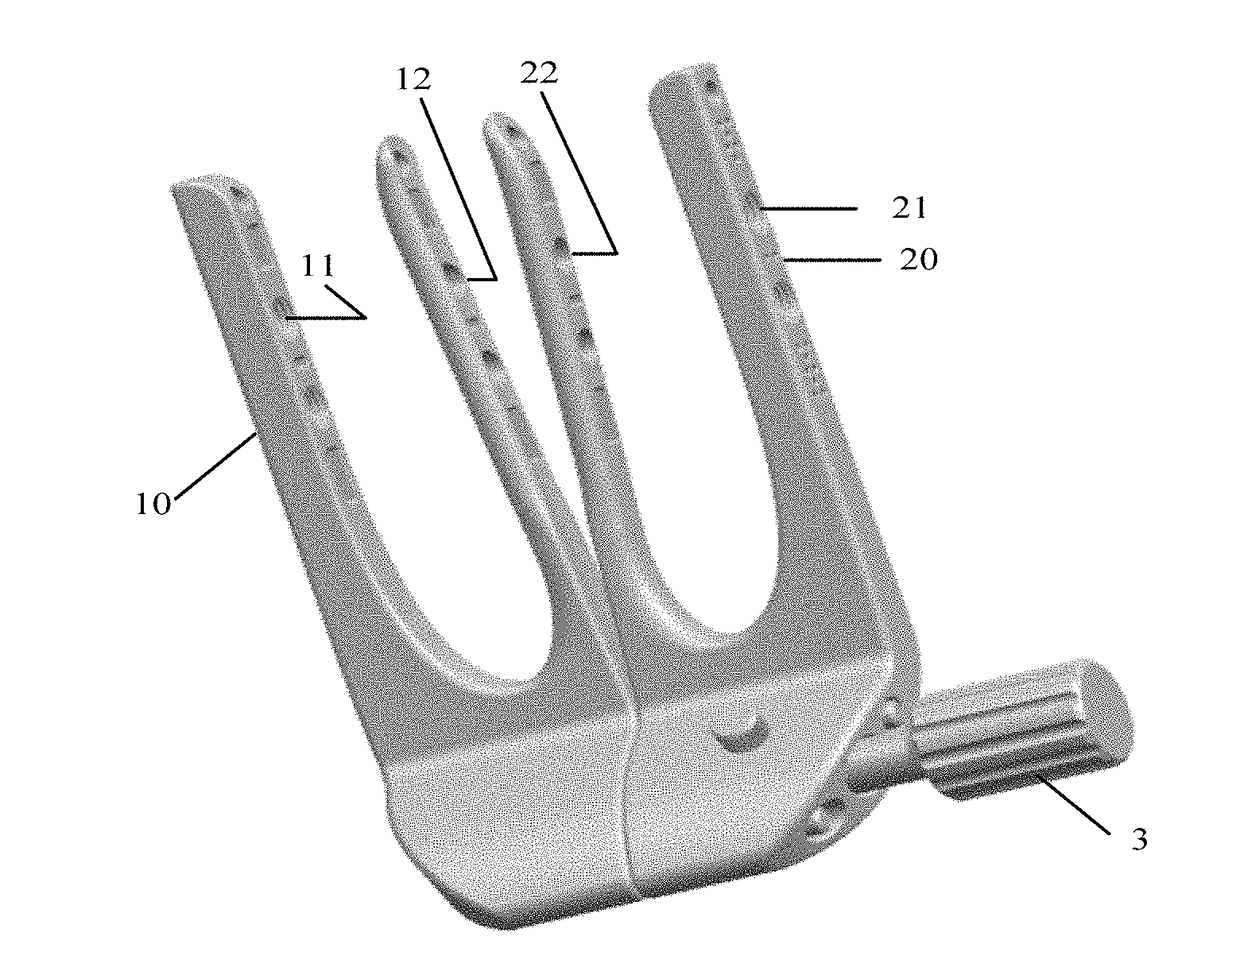 Achilles tendon suture apparatus and method of using same